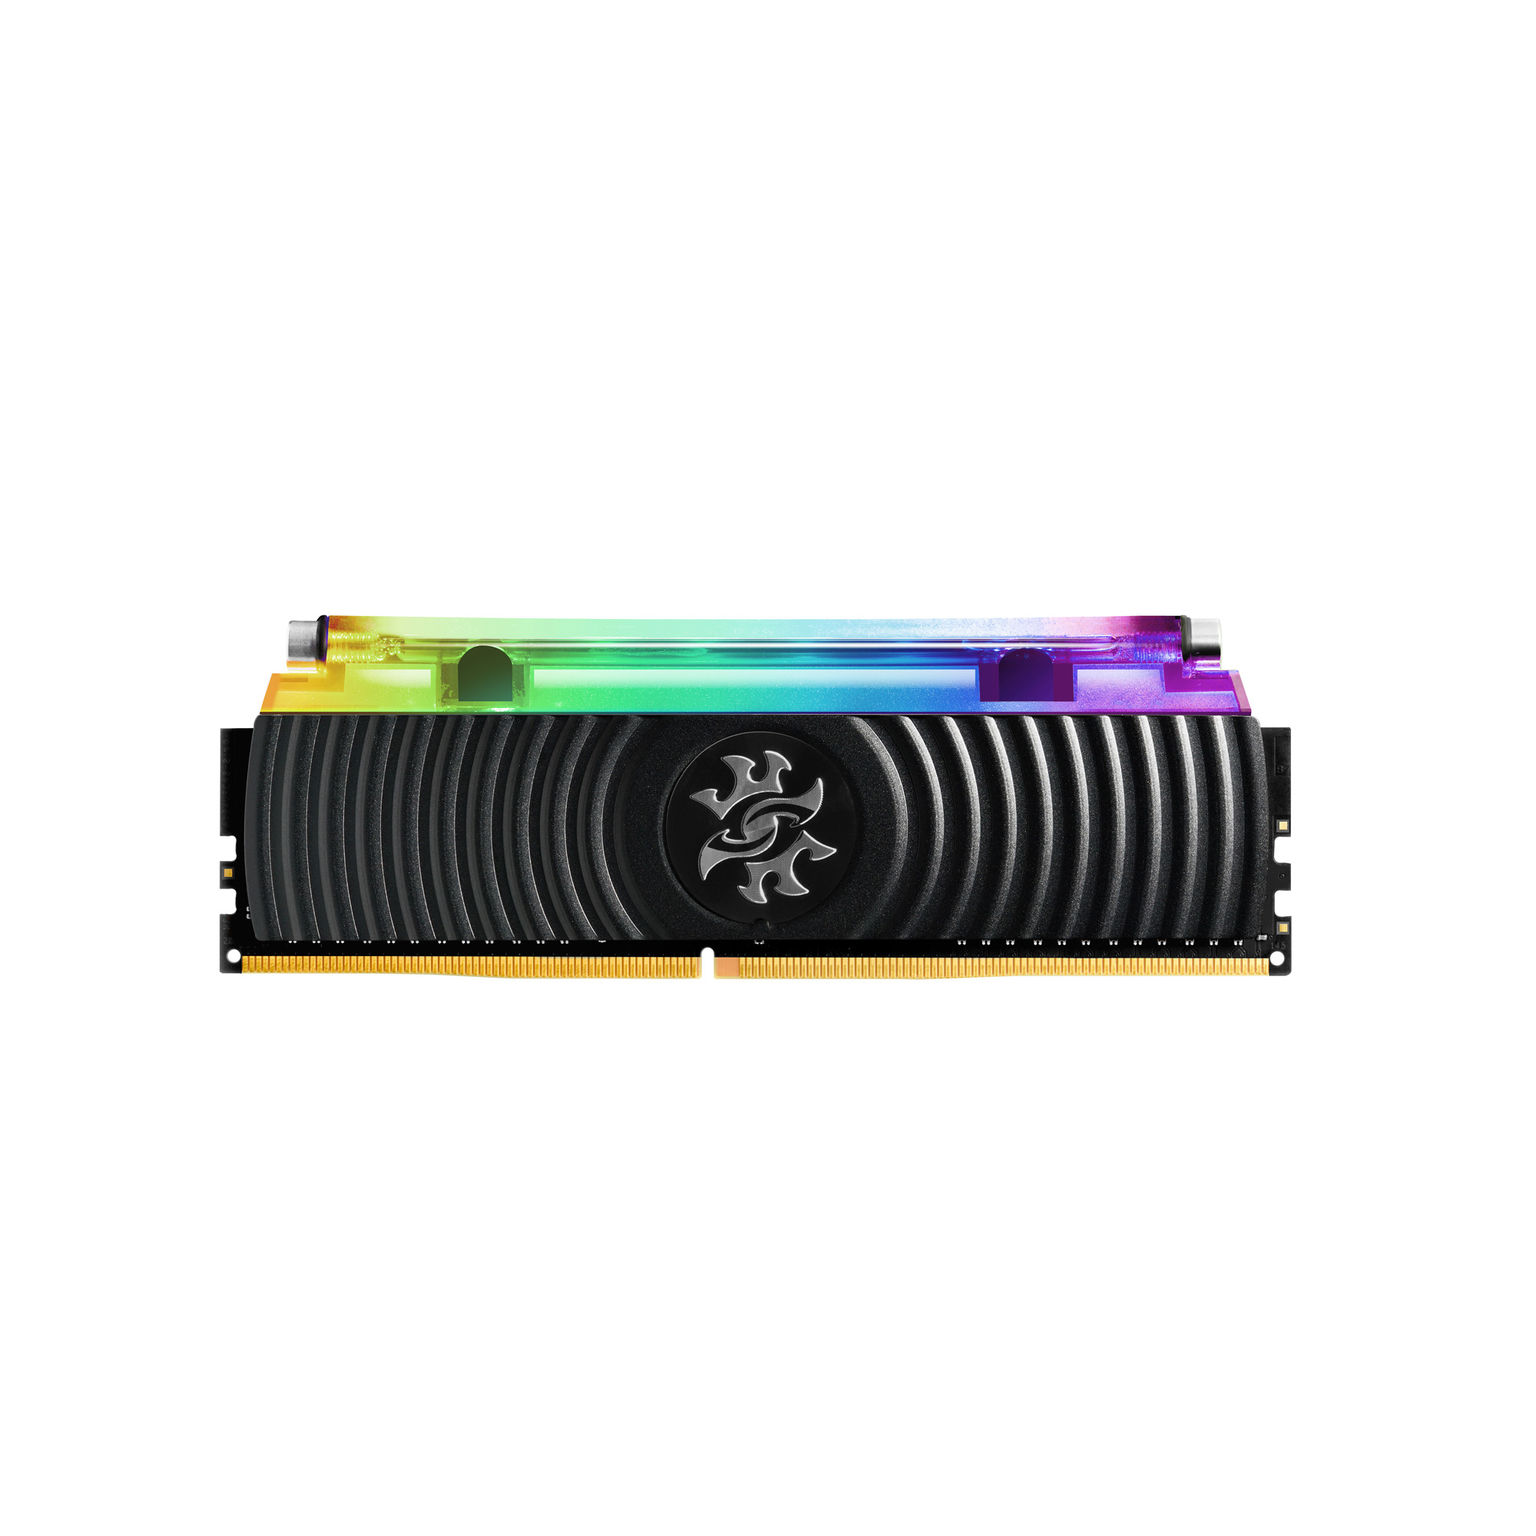 SPECTRIX D80 DDR4 RGB Liquid Cooling Memory